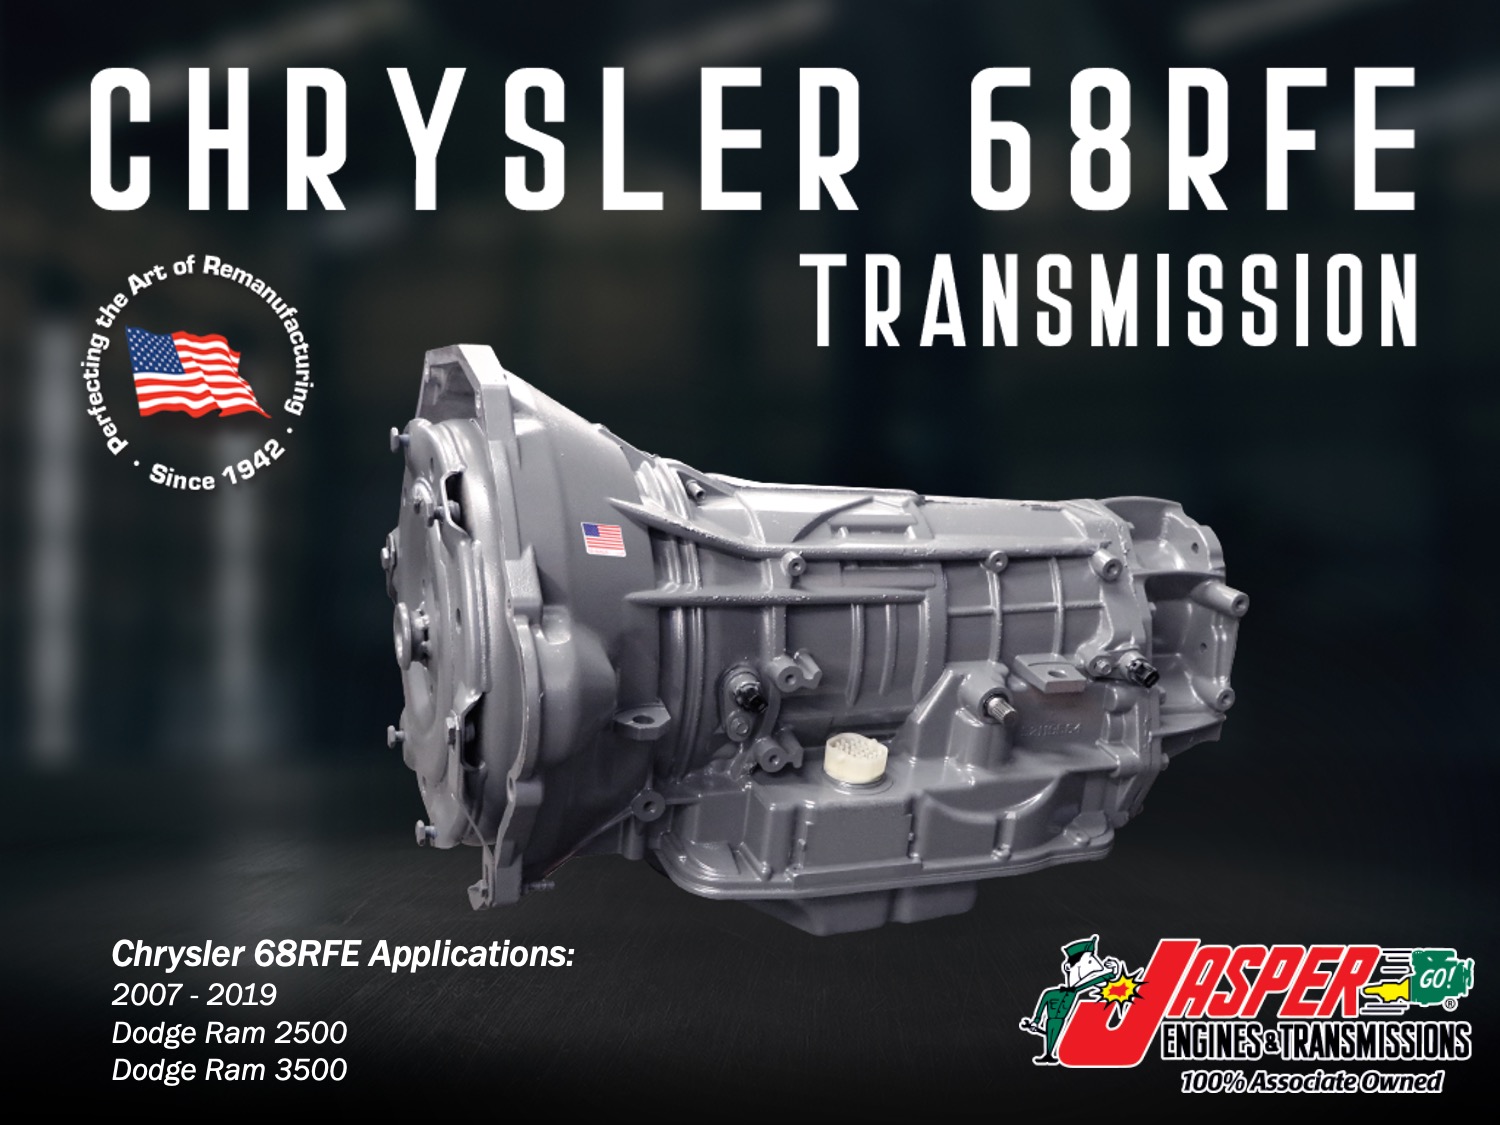 Chrysler 68 RFE Transmission